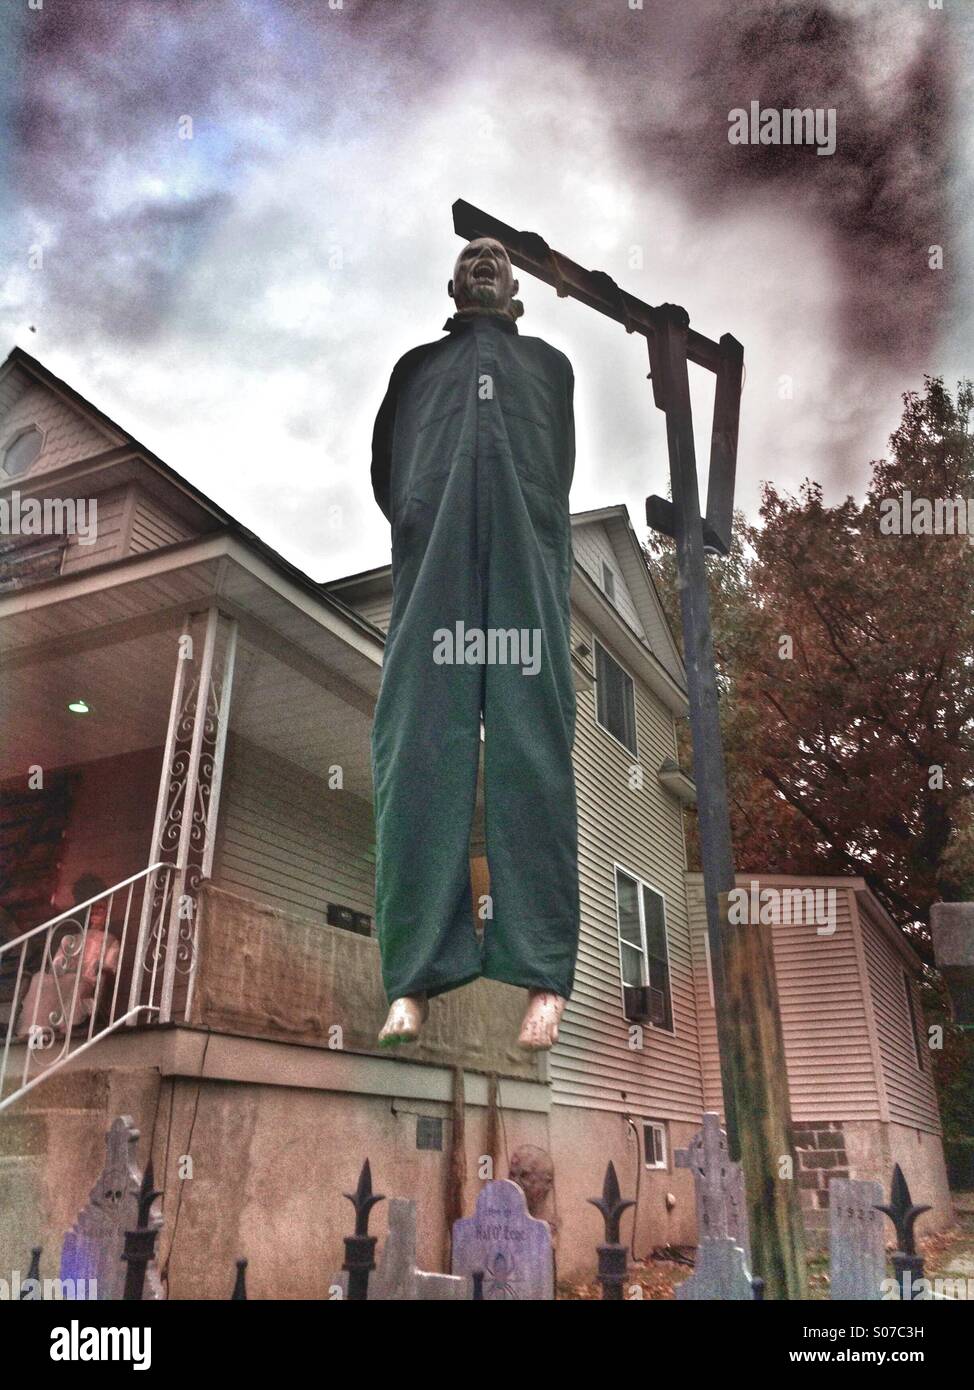 Mann in Friedhof - Halloweendekoration hängen Stockfoto